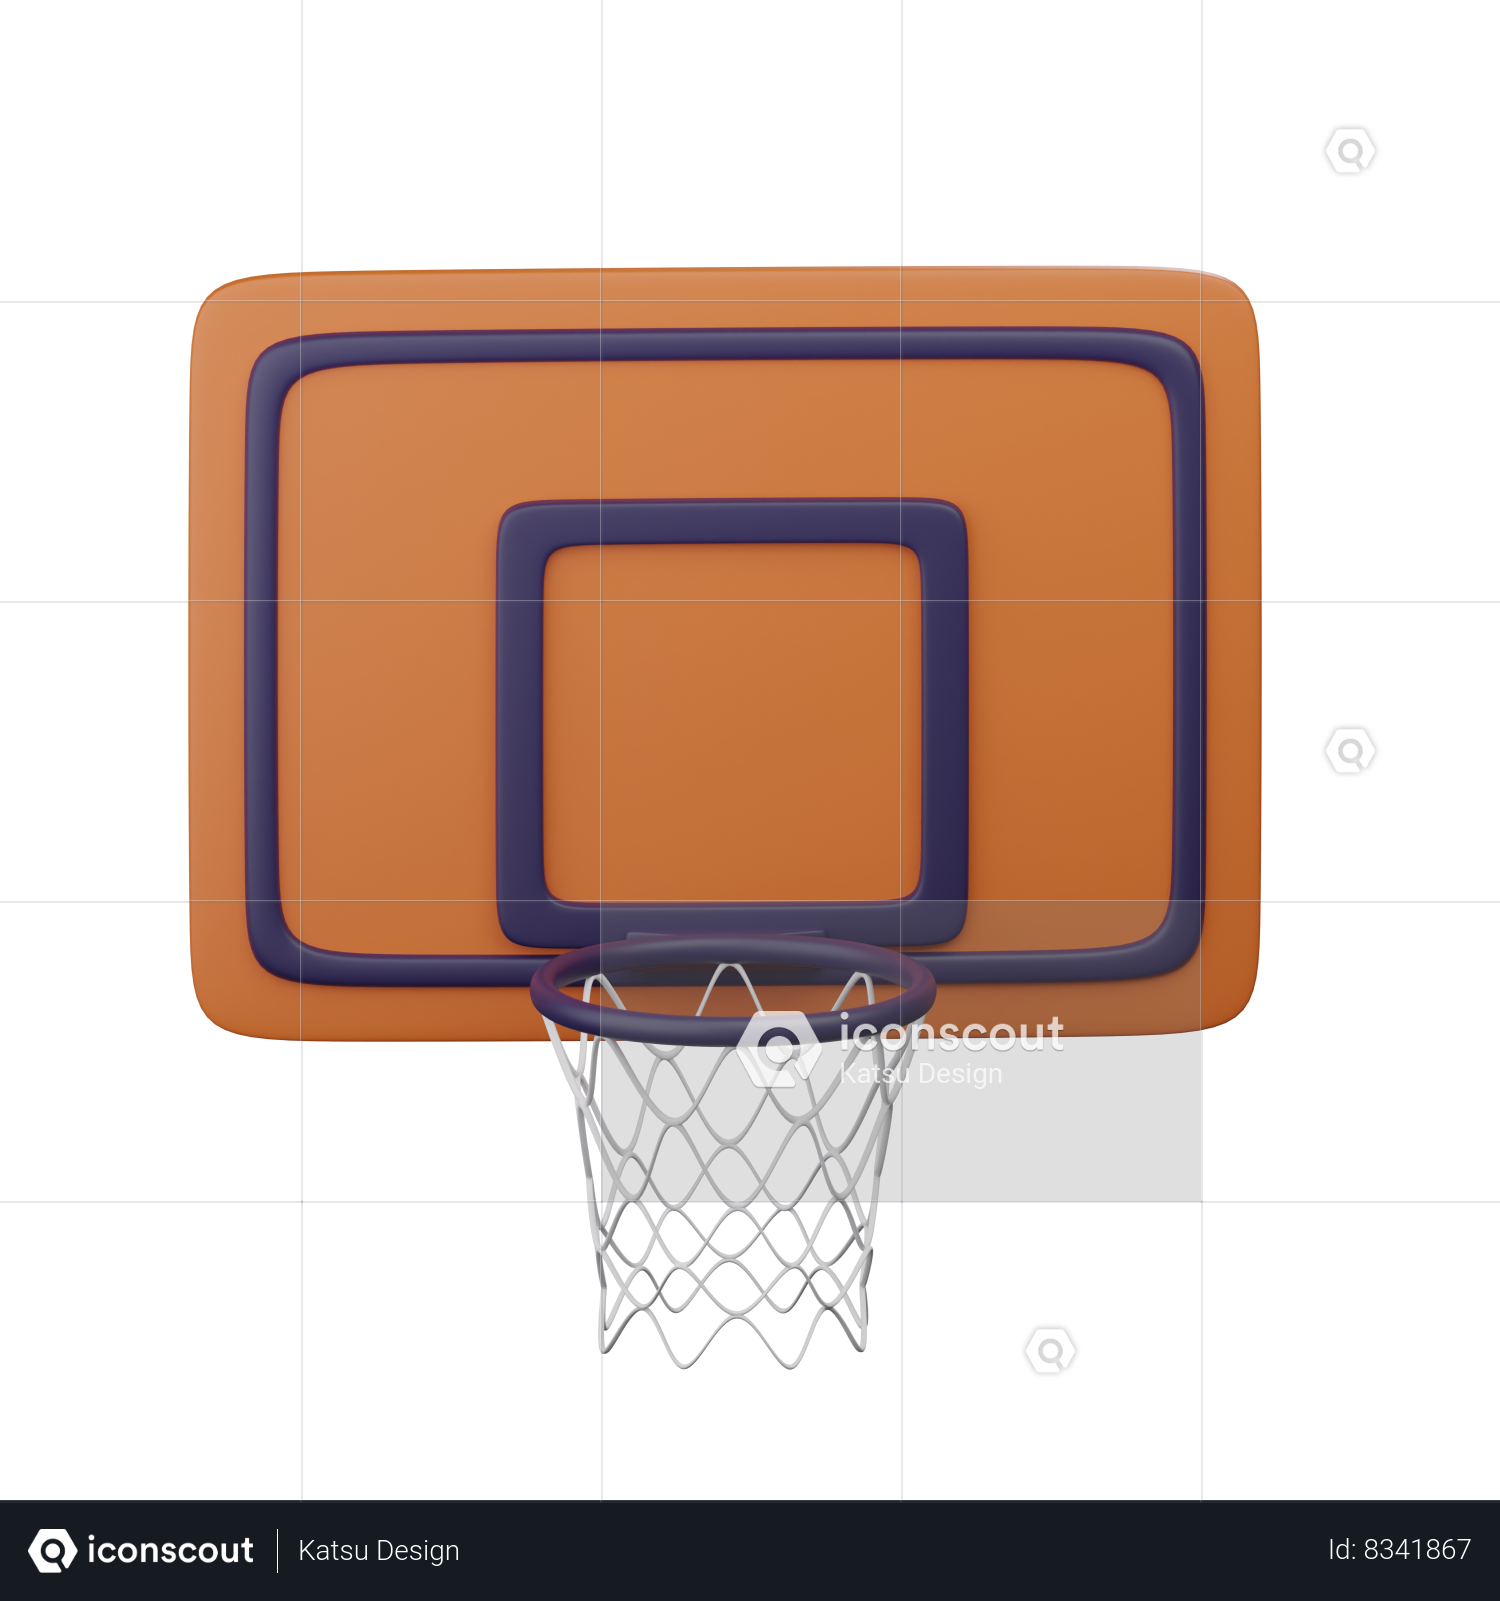 Basketball Goals :: Draper, Inc.